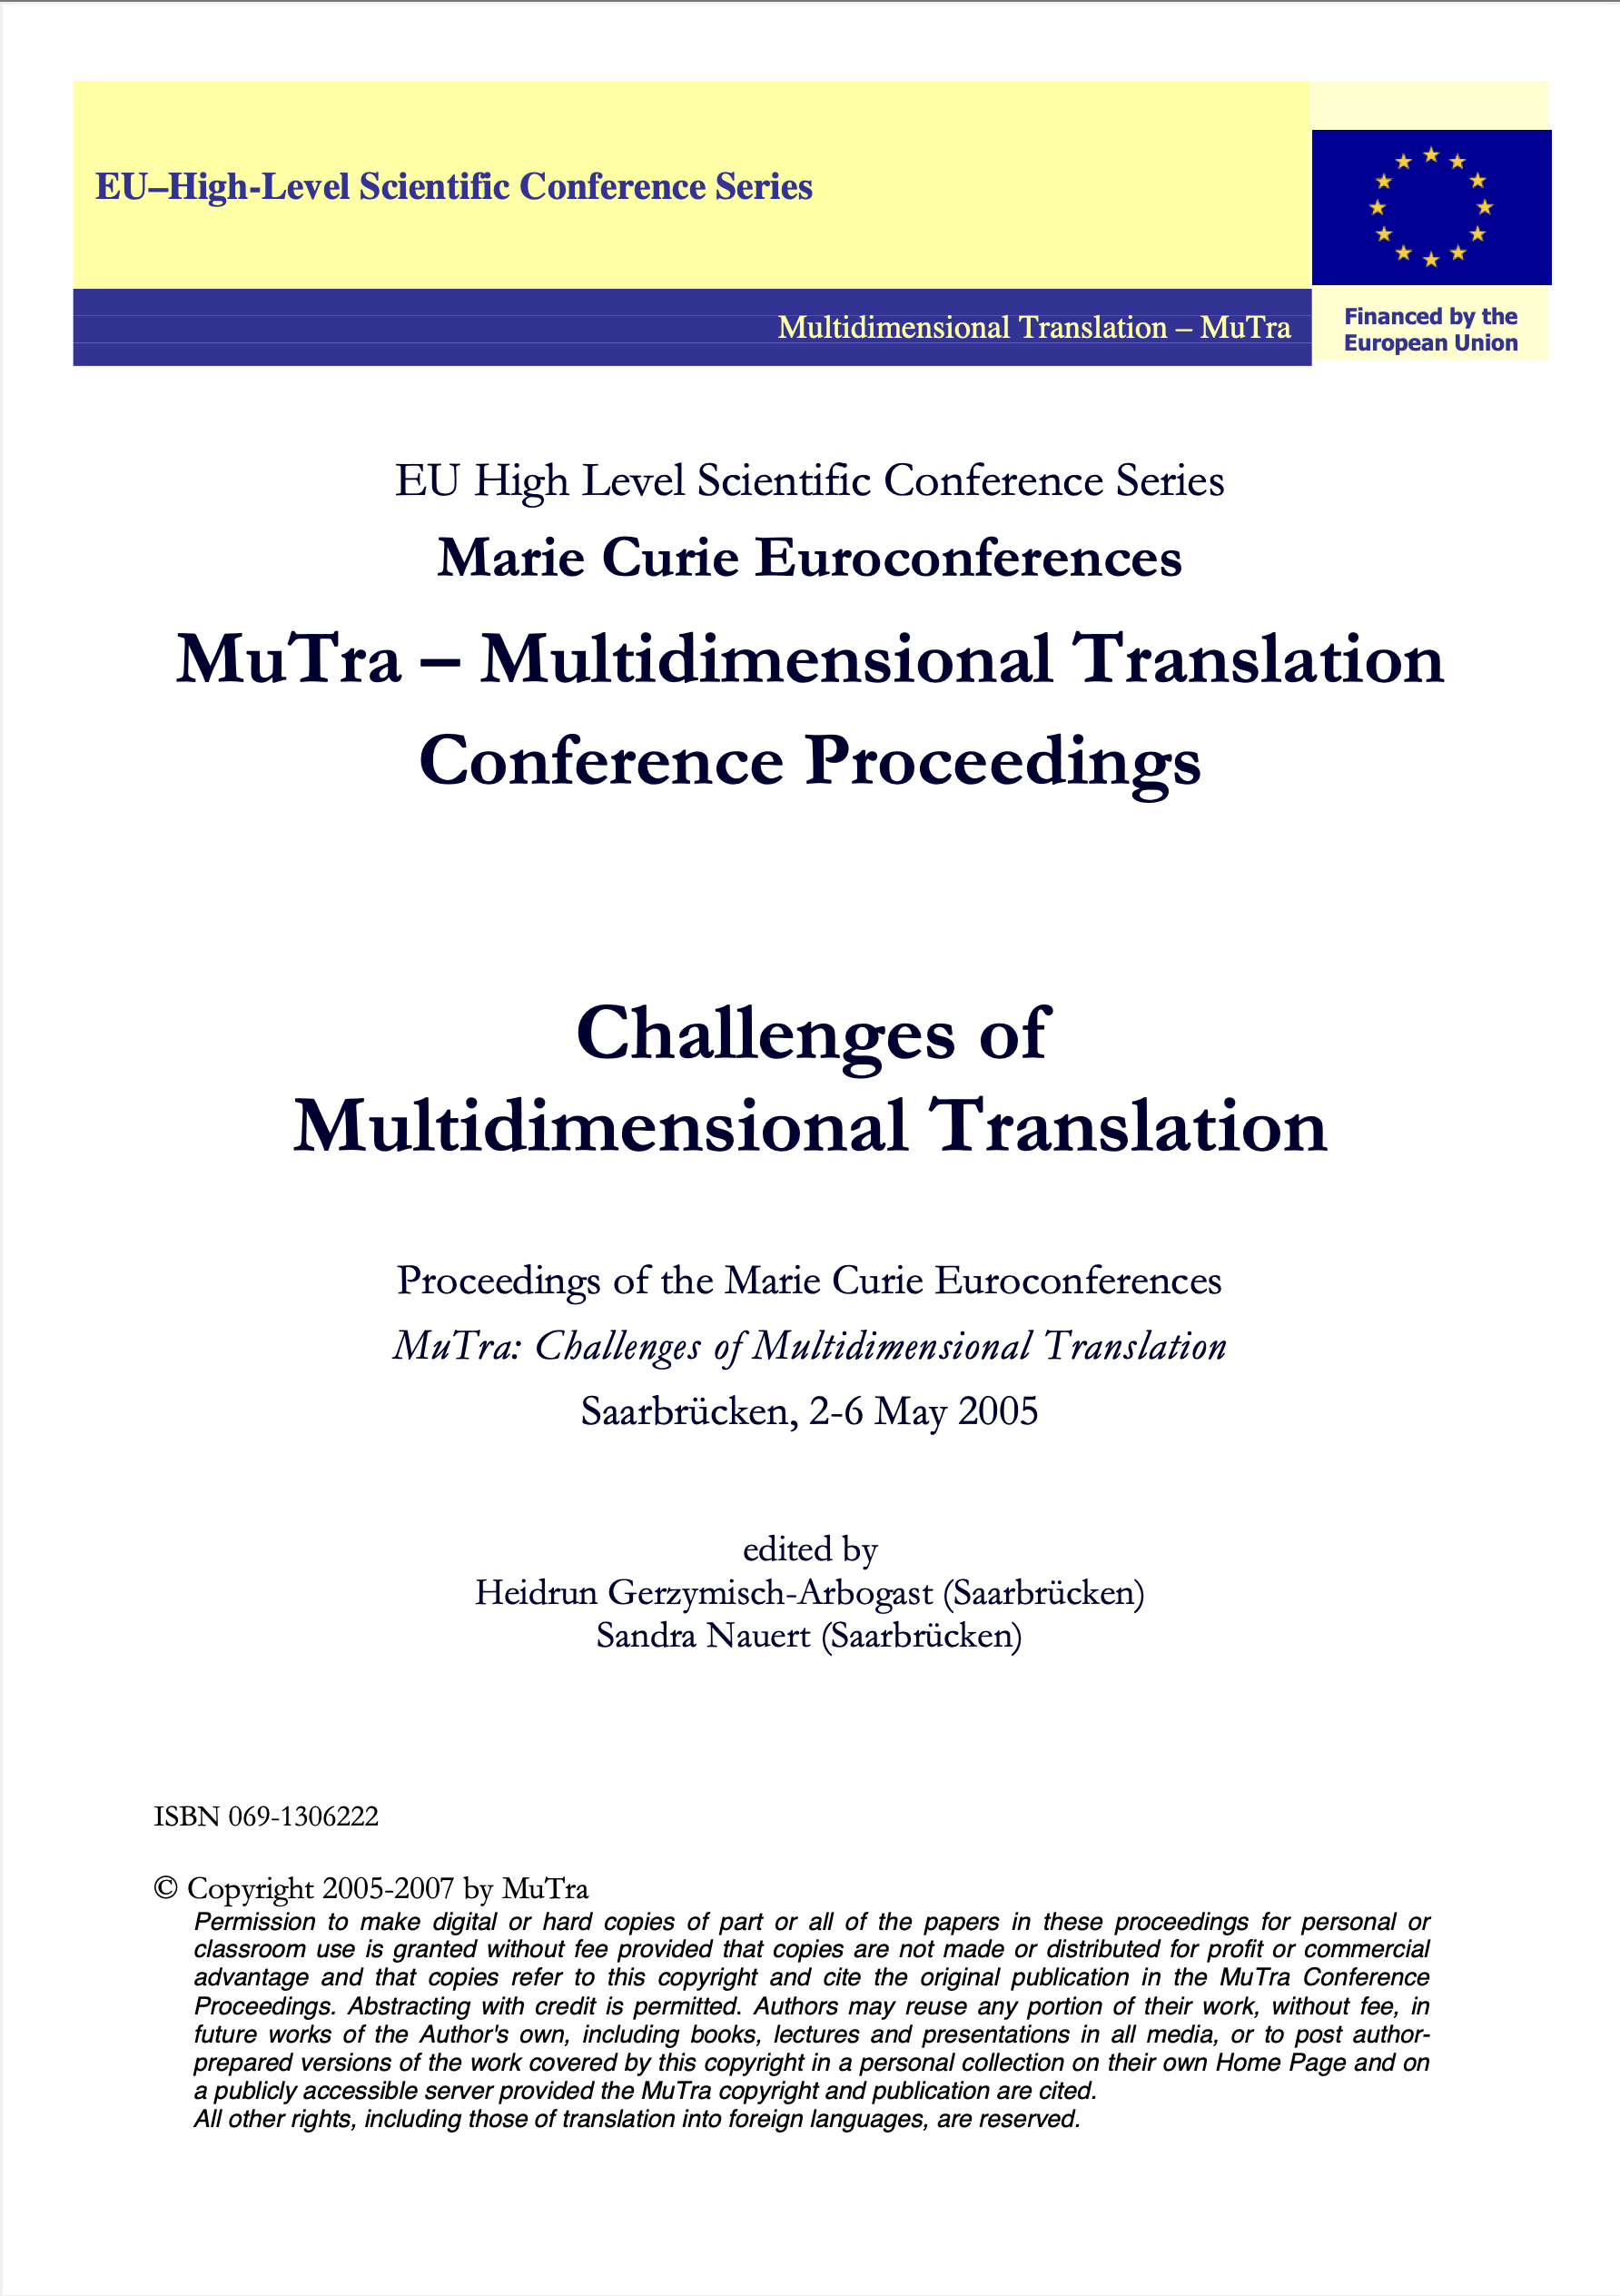 Challenges of Multidimensional Translation